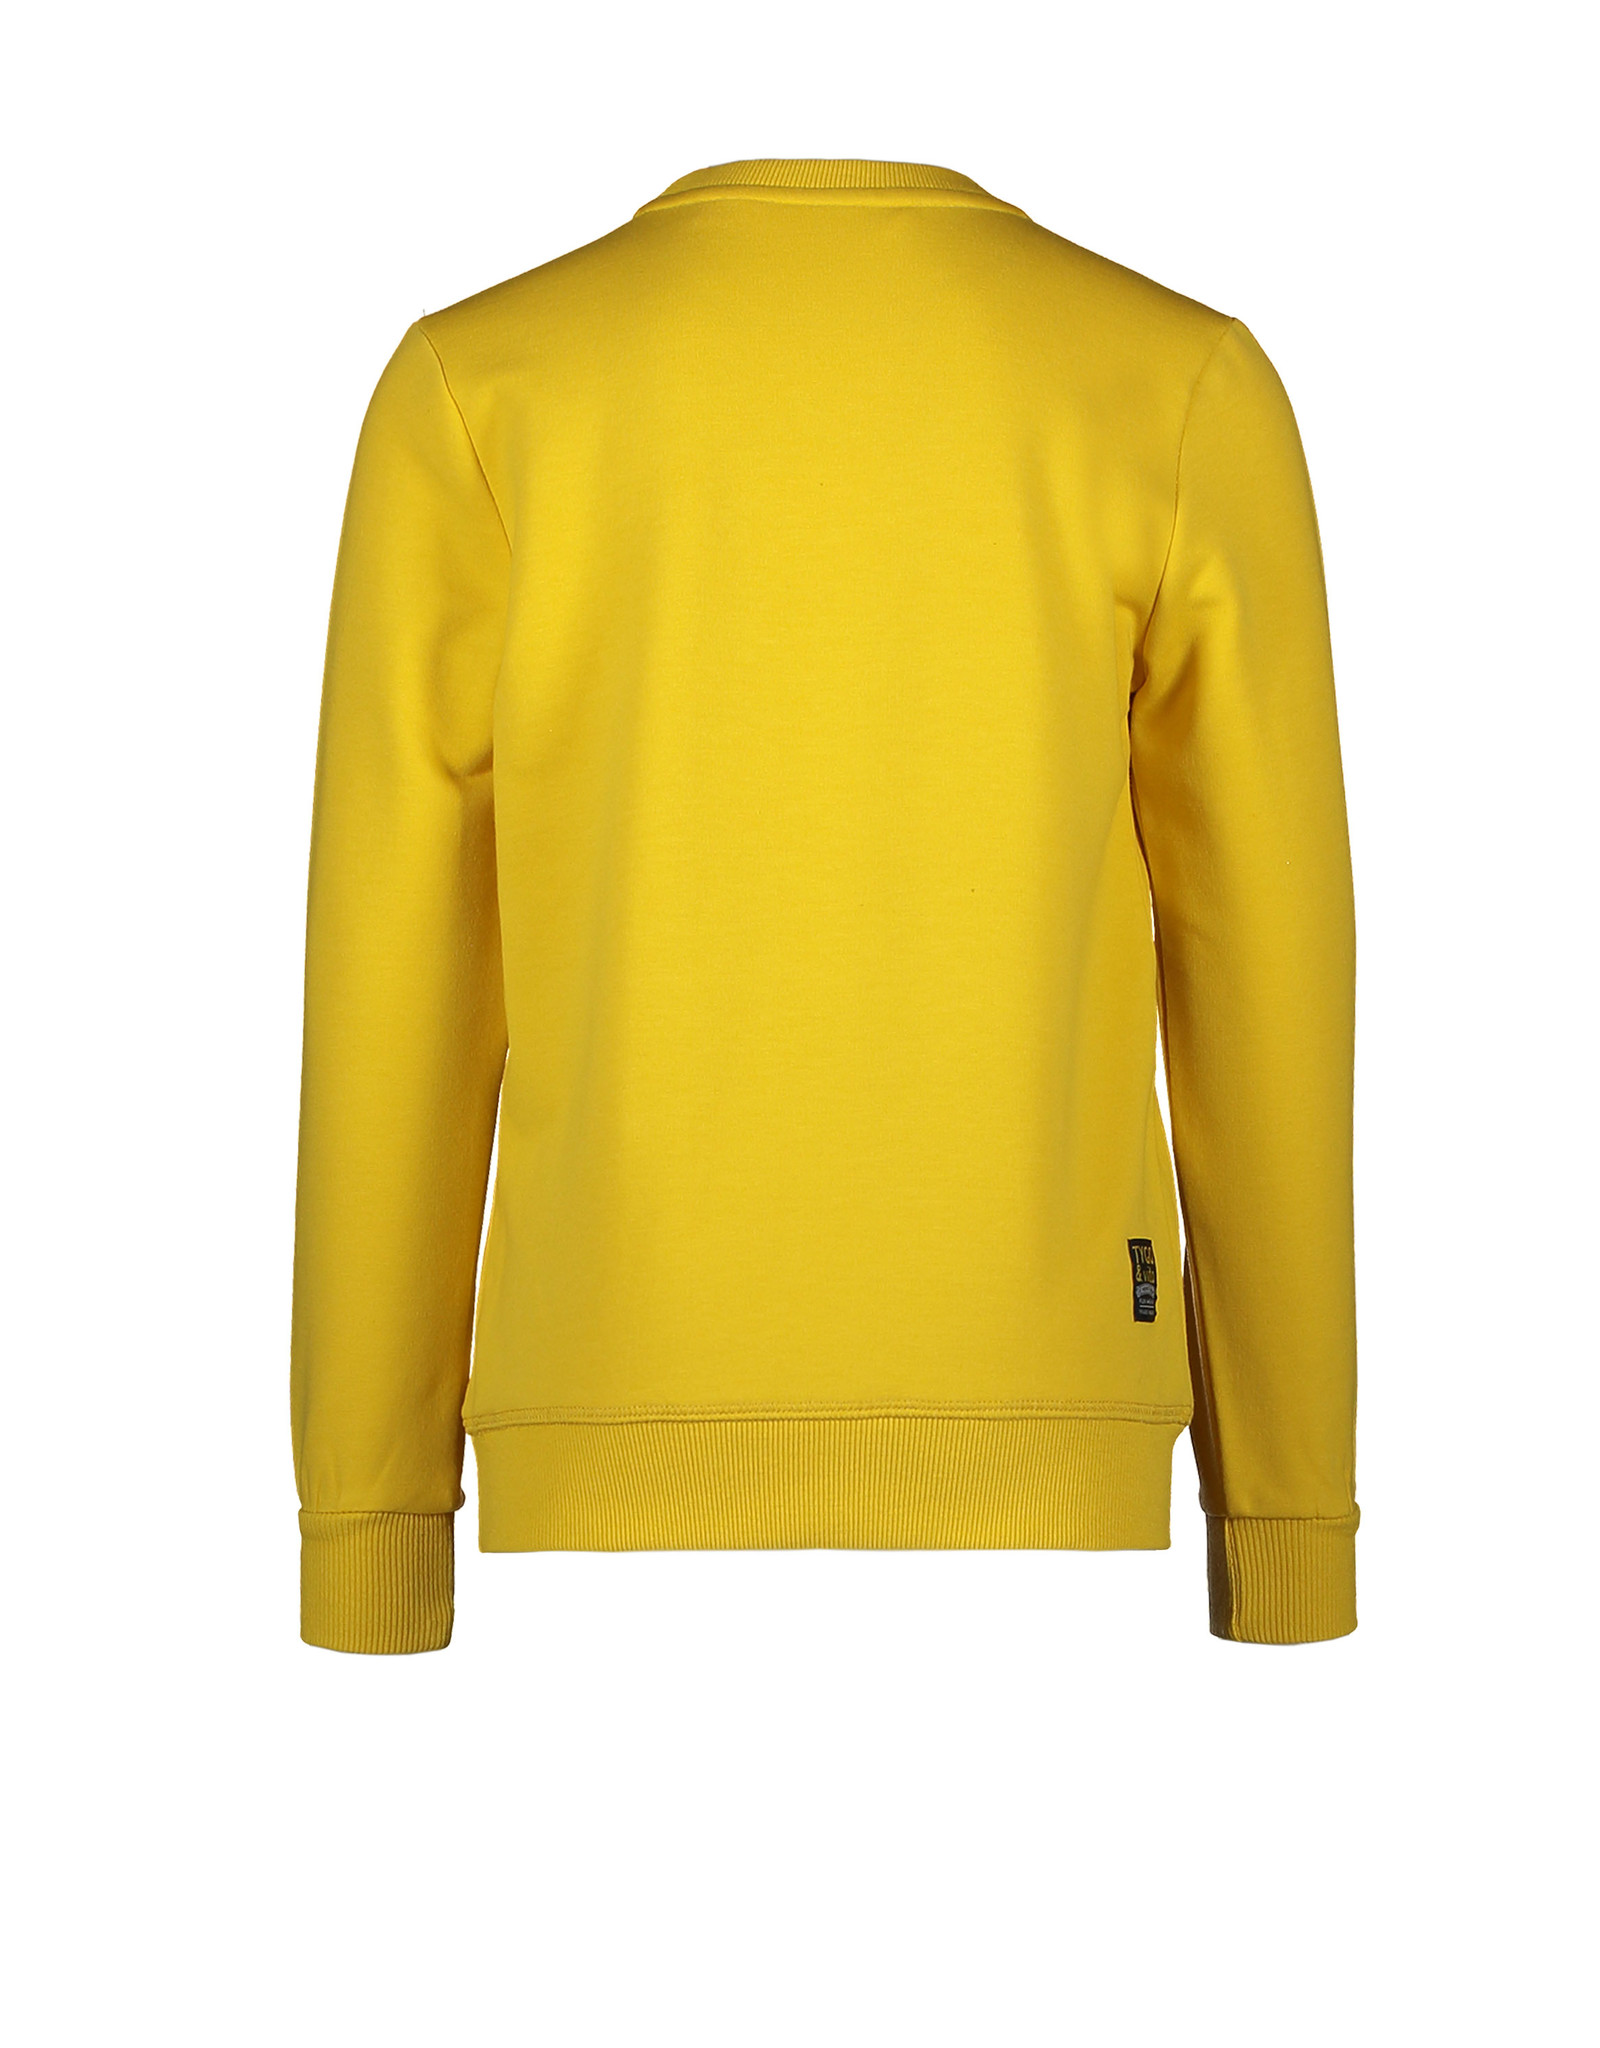 Tygo&Vito Tygo&Vito sweater 6320 yellow